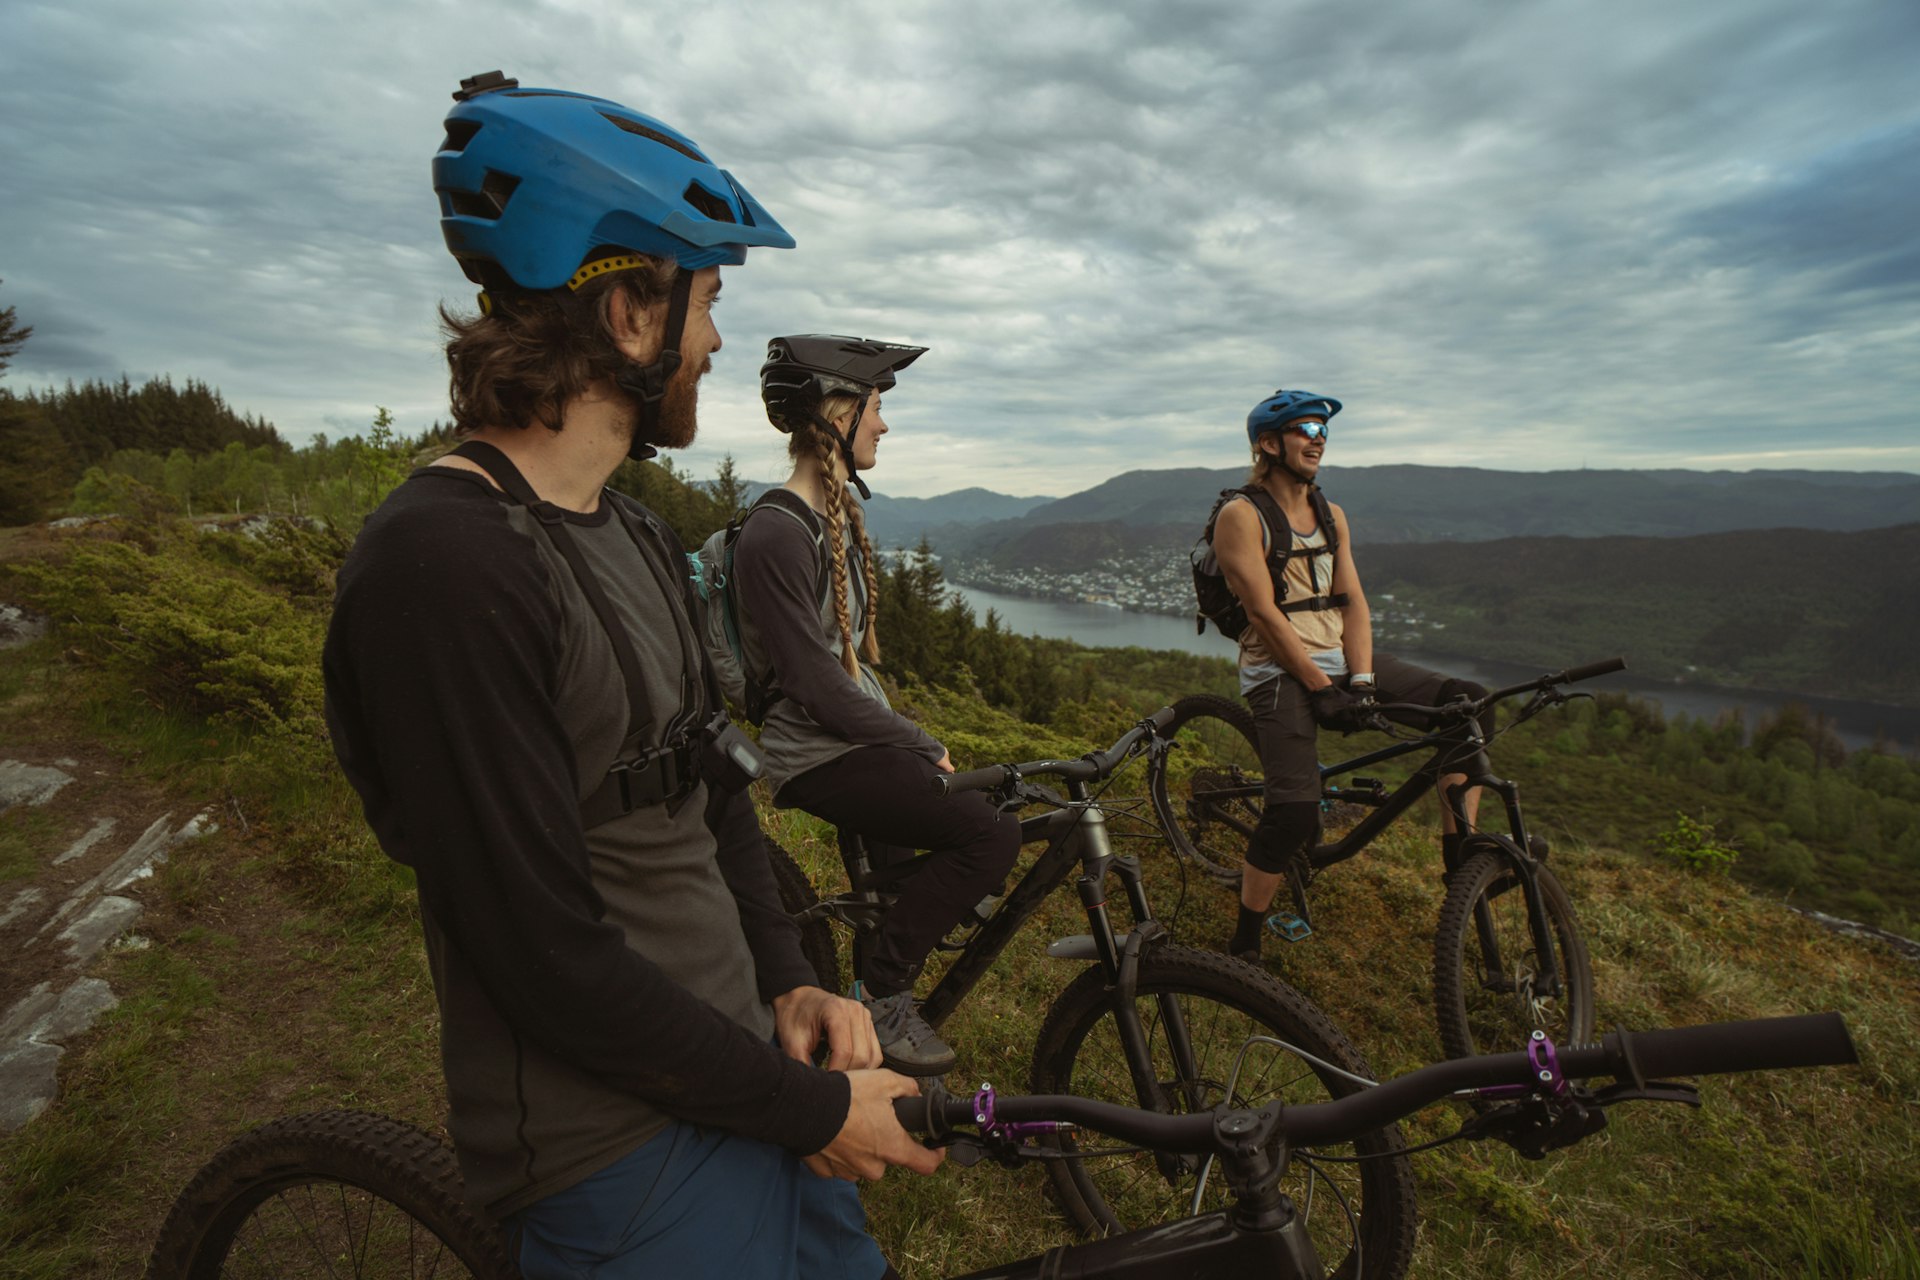 Group of three friends riding mountain-bikes on a mountain top